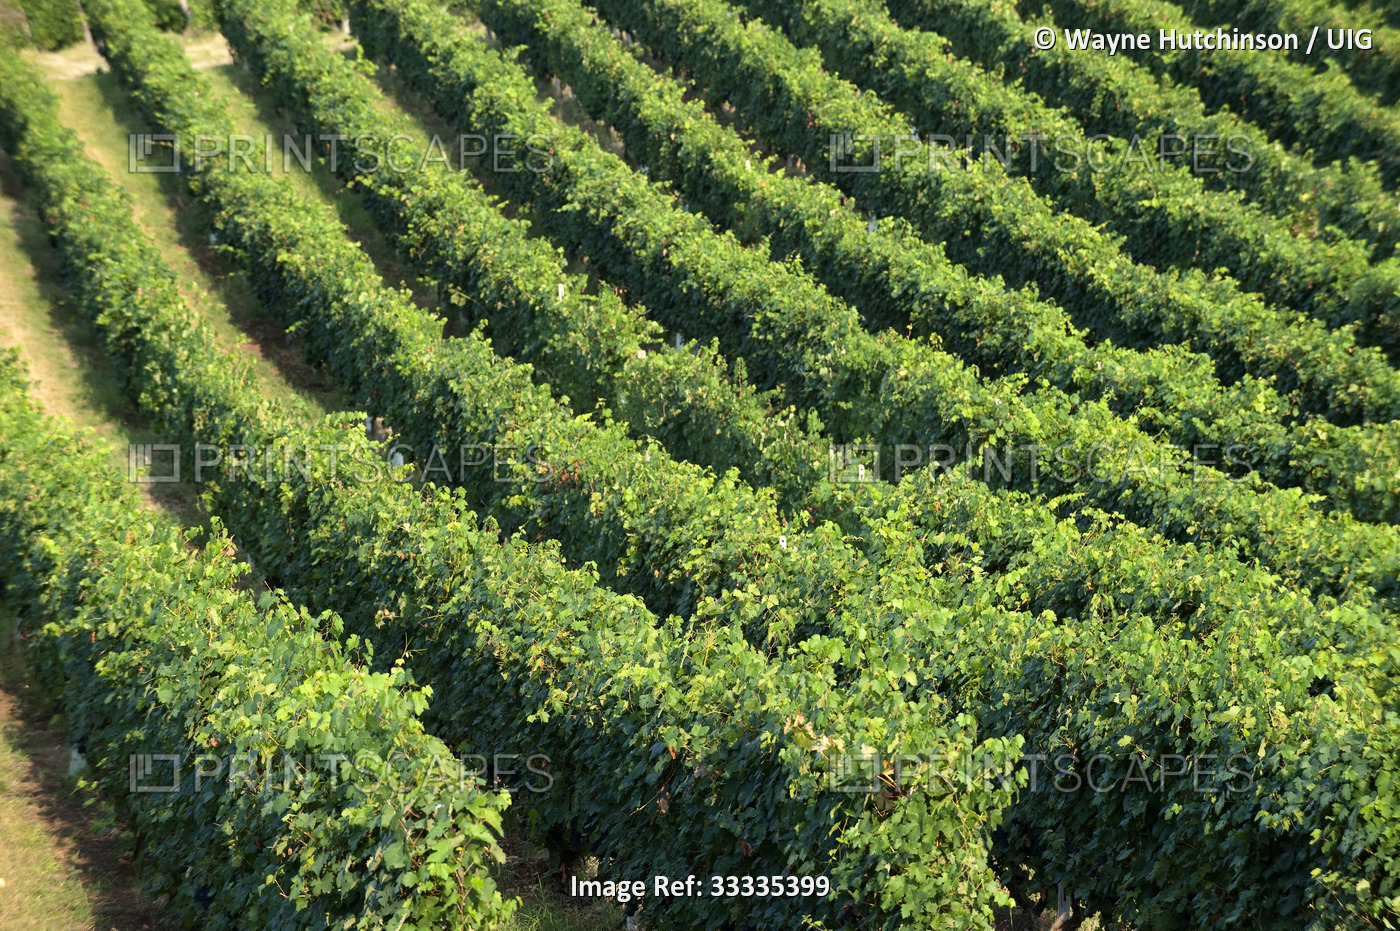 Italian vineyards and grapes near Piacenza